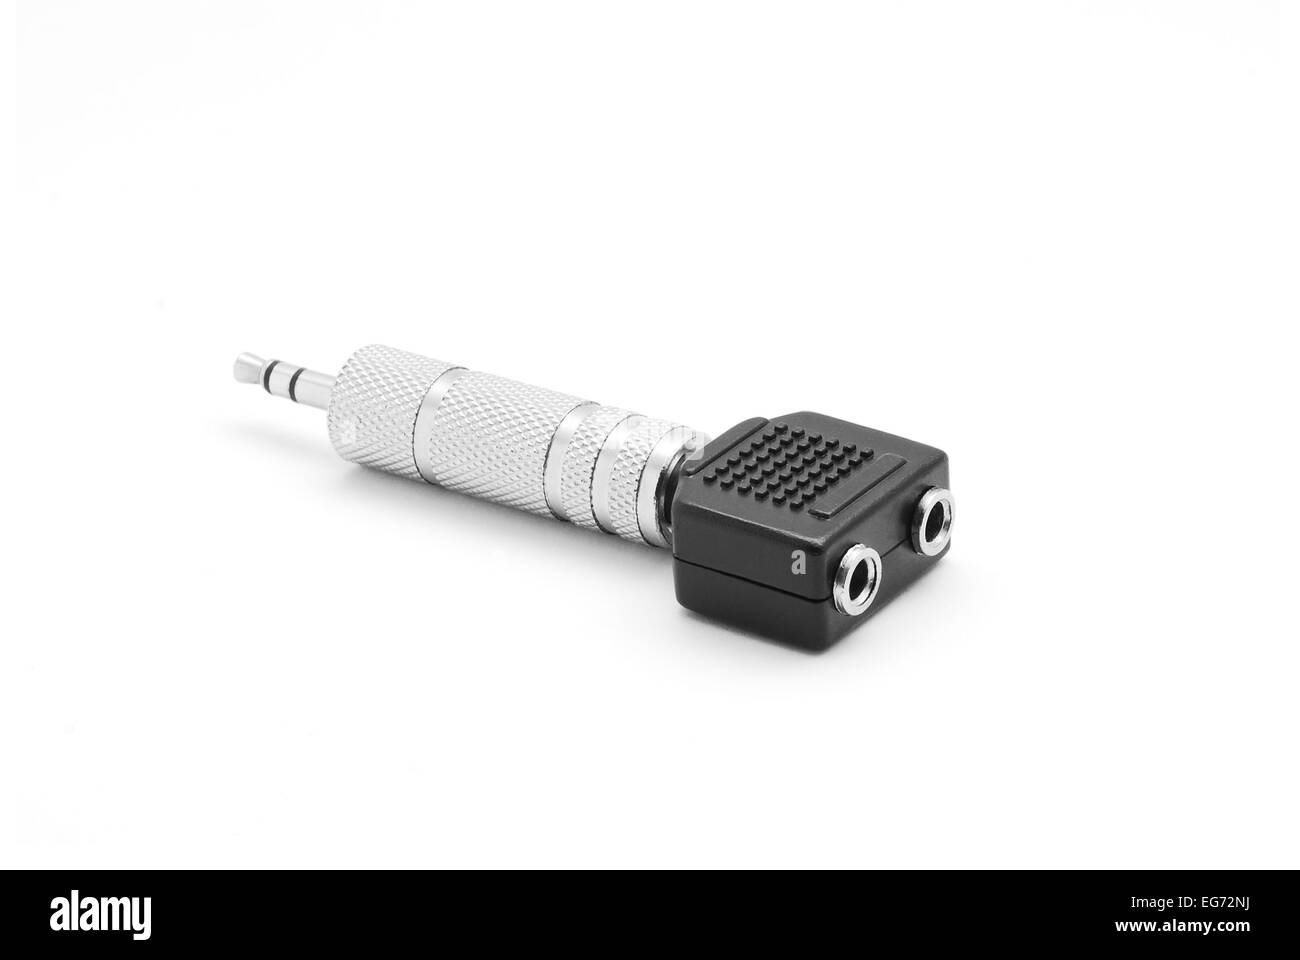 audio jack adapter single to double output Stock Photo